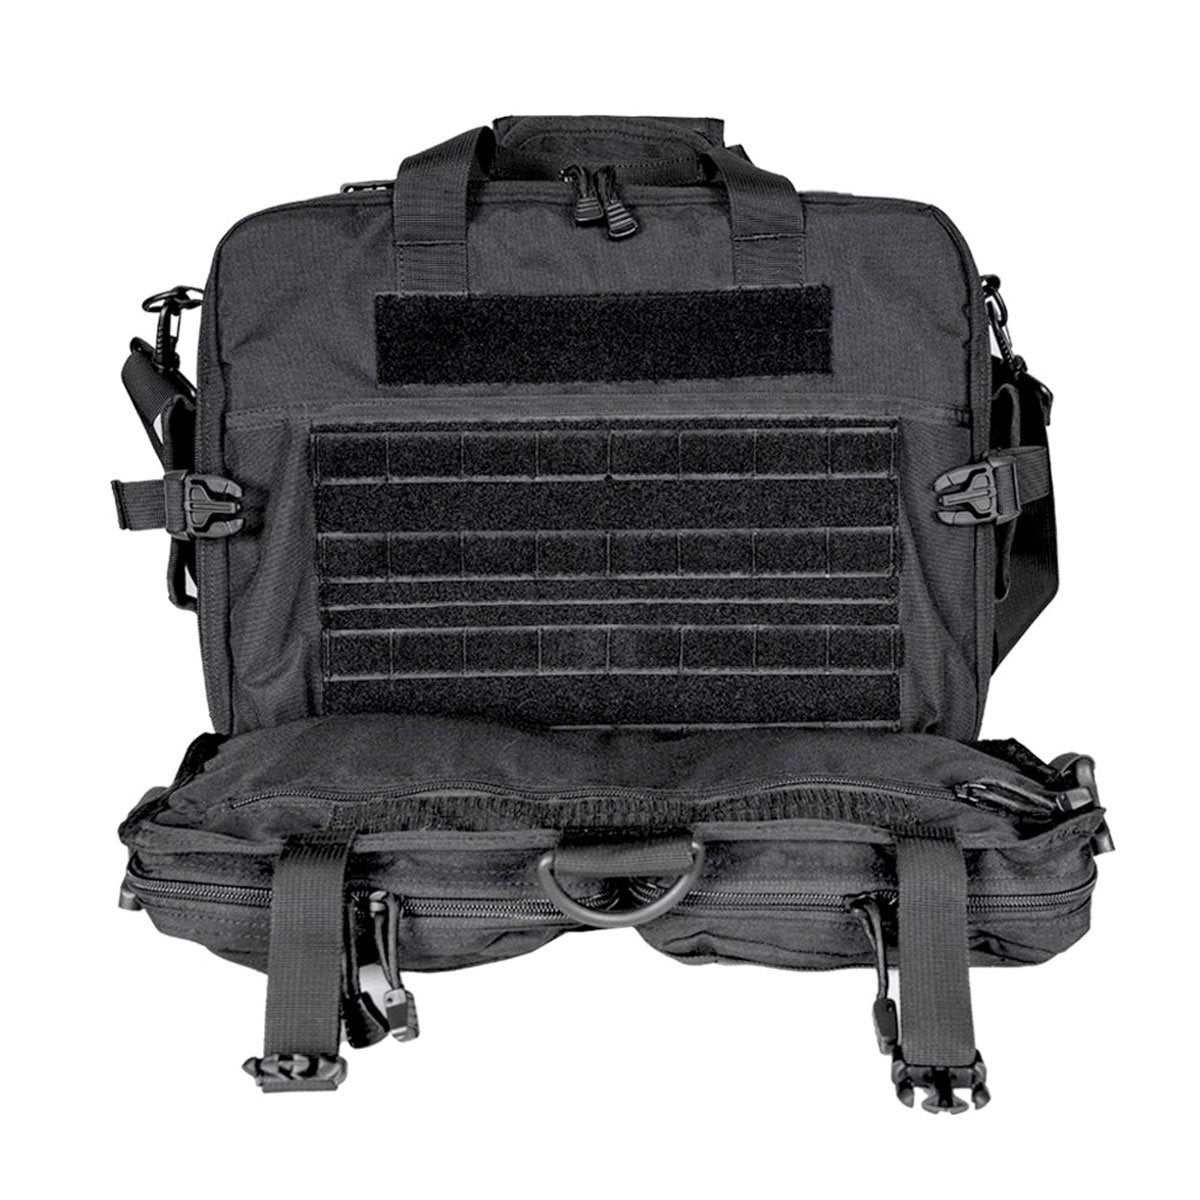 221B Tactical Hondo Patrol Duty Gear Bag 2.0